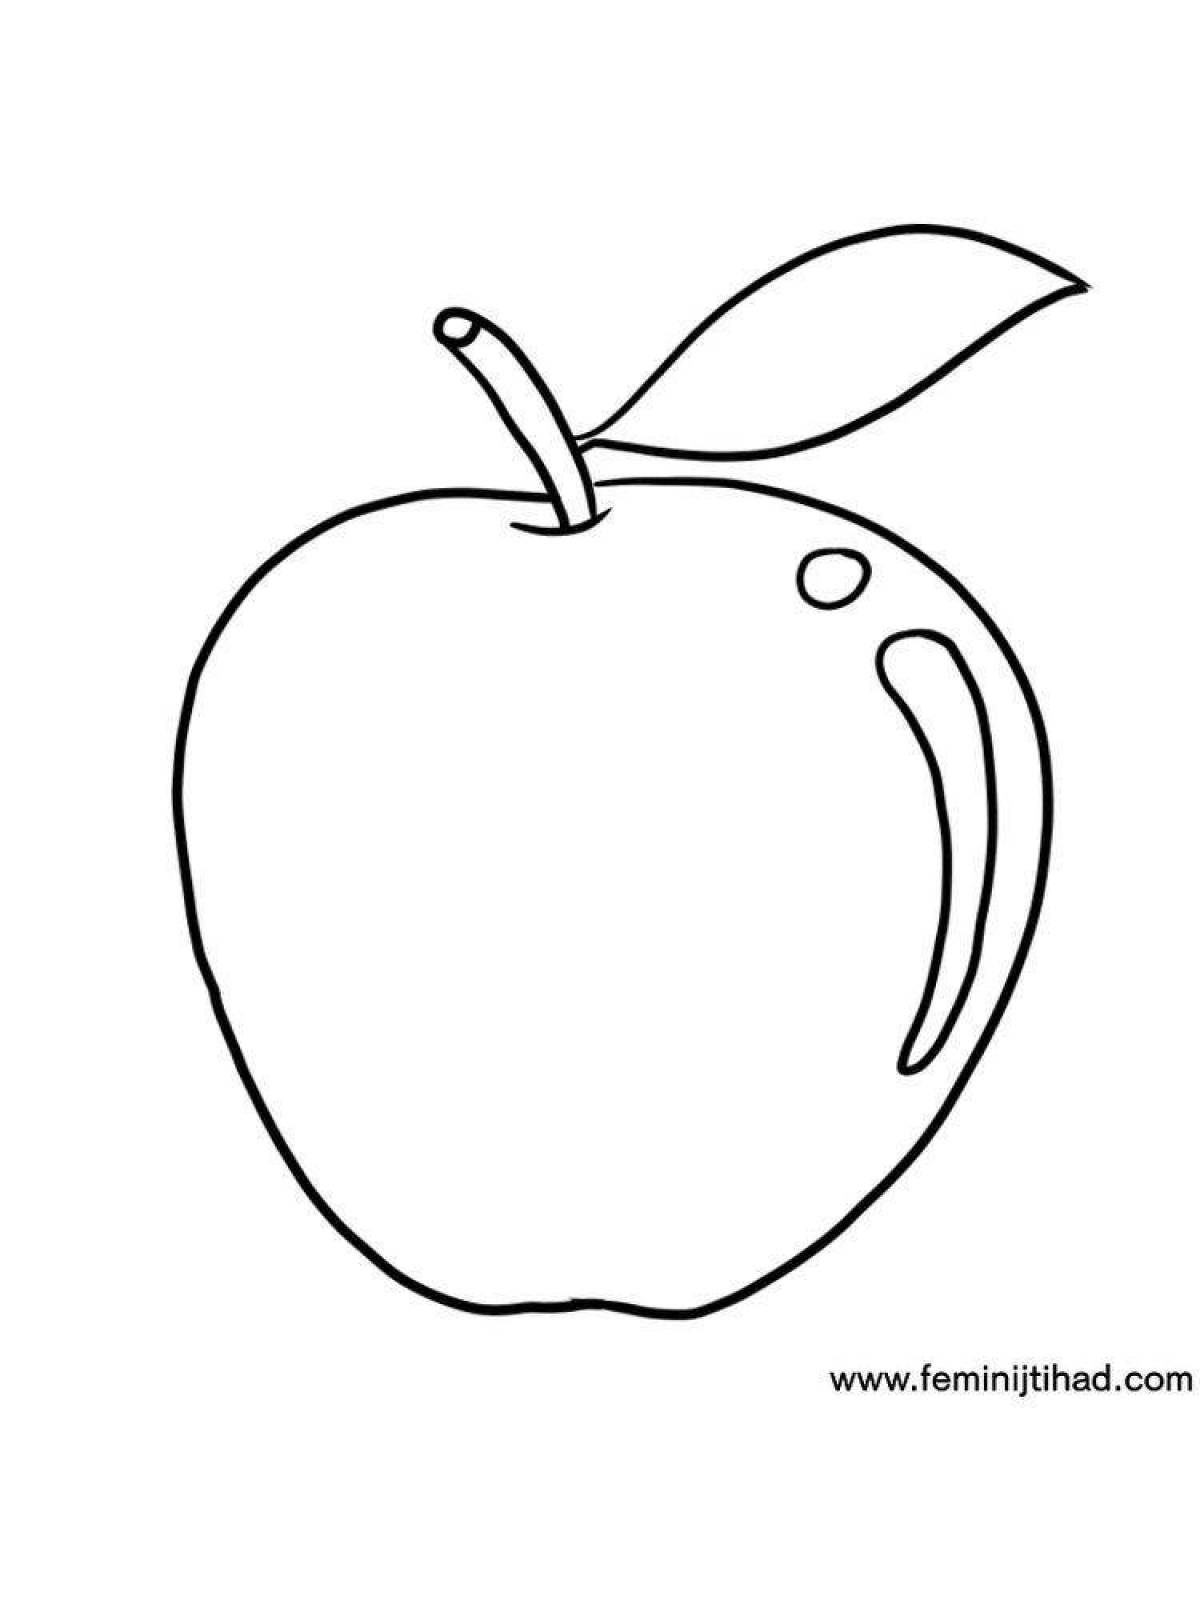 Яркая яблочная раскраска для детей 3-4 лет